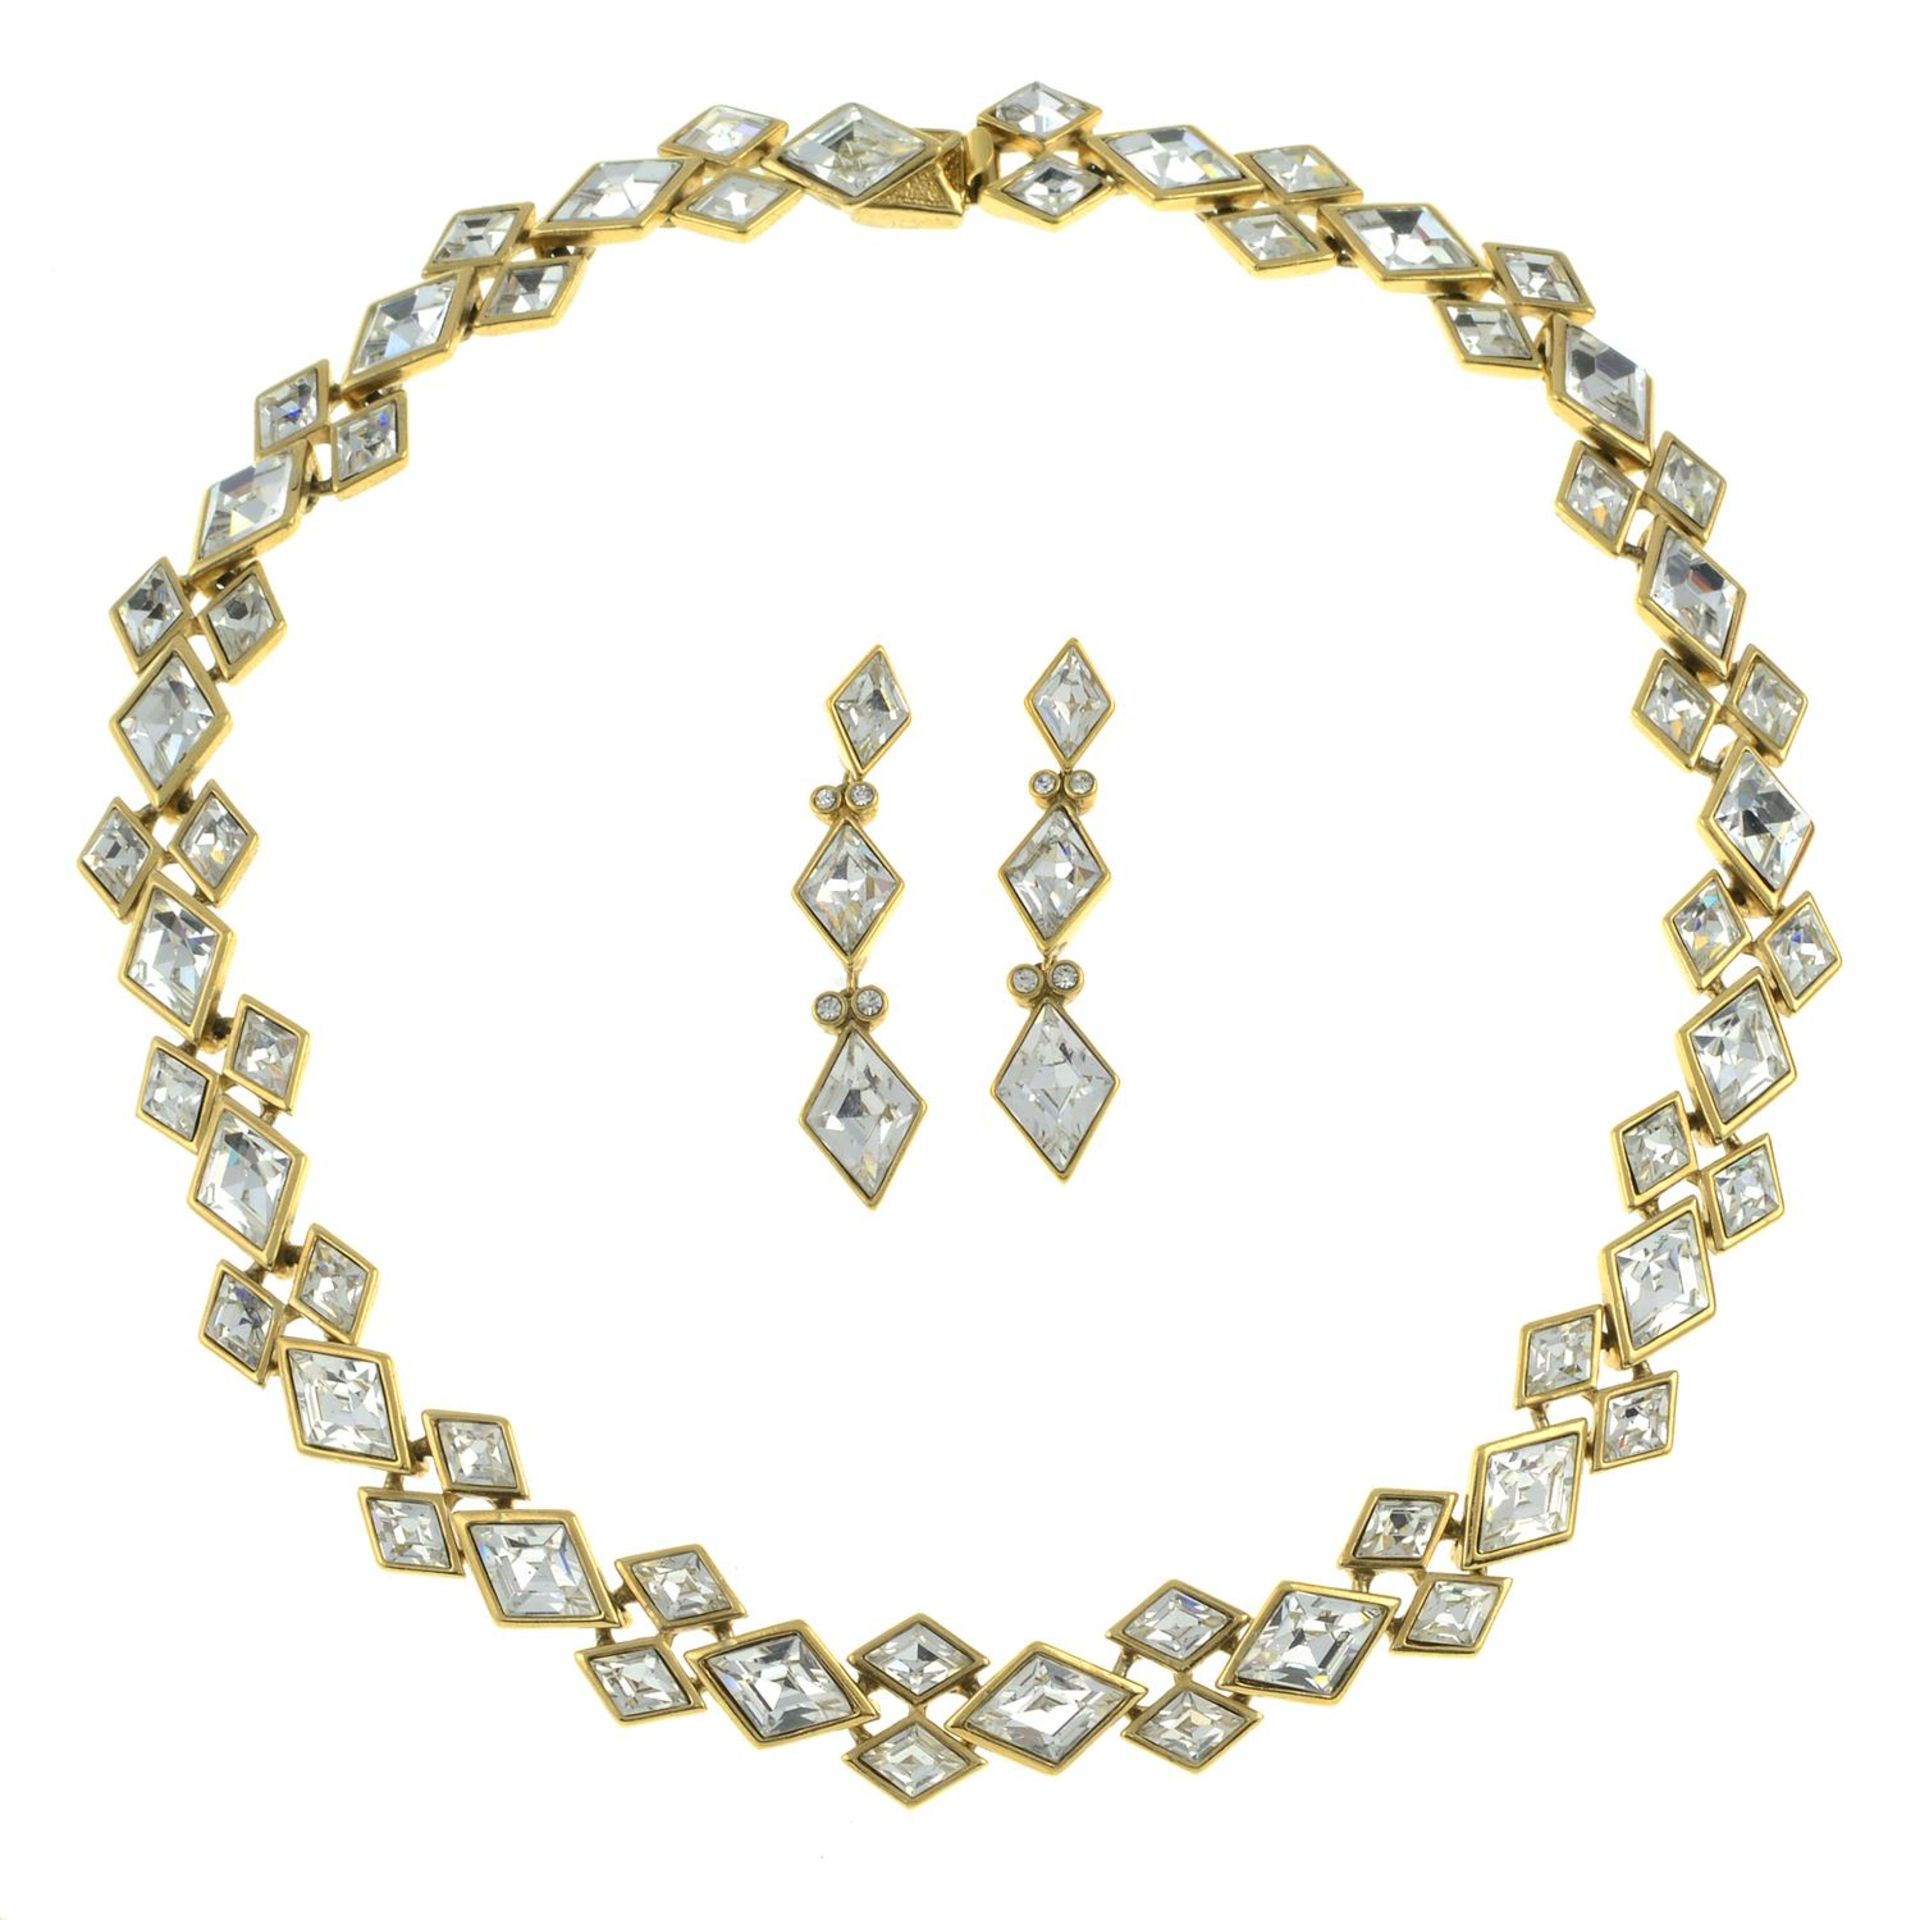 Set of cubic zirconia jewellery, by Atwood & Sawyer